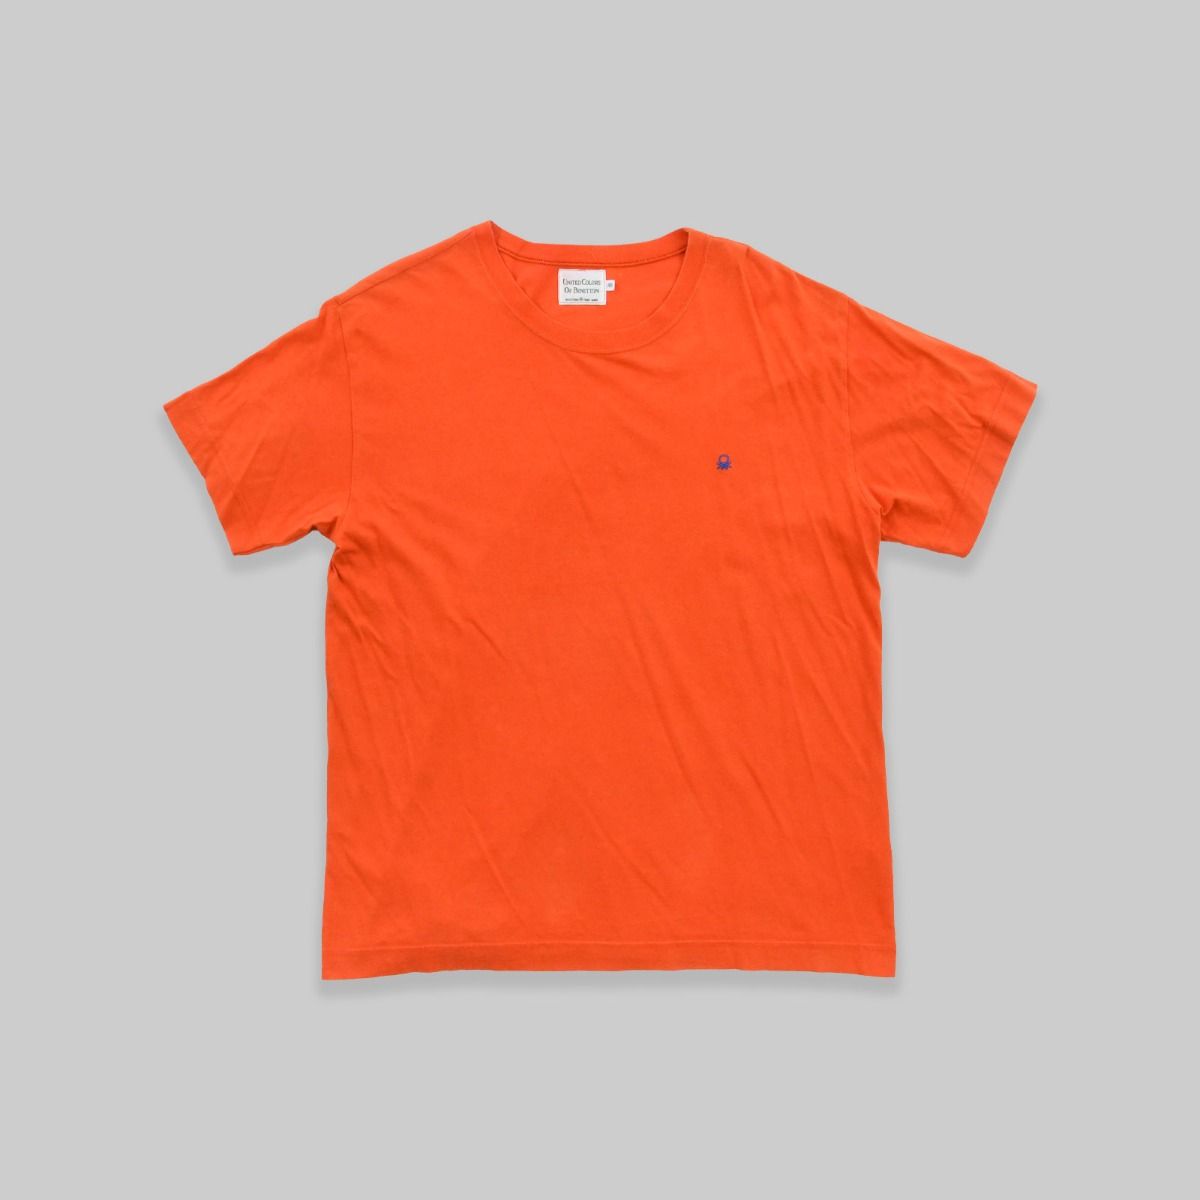 United Colors of Benetton Orange T-Shirt